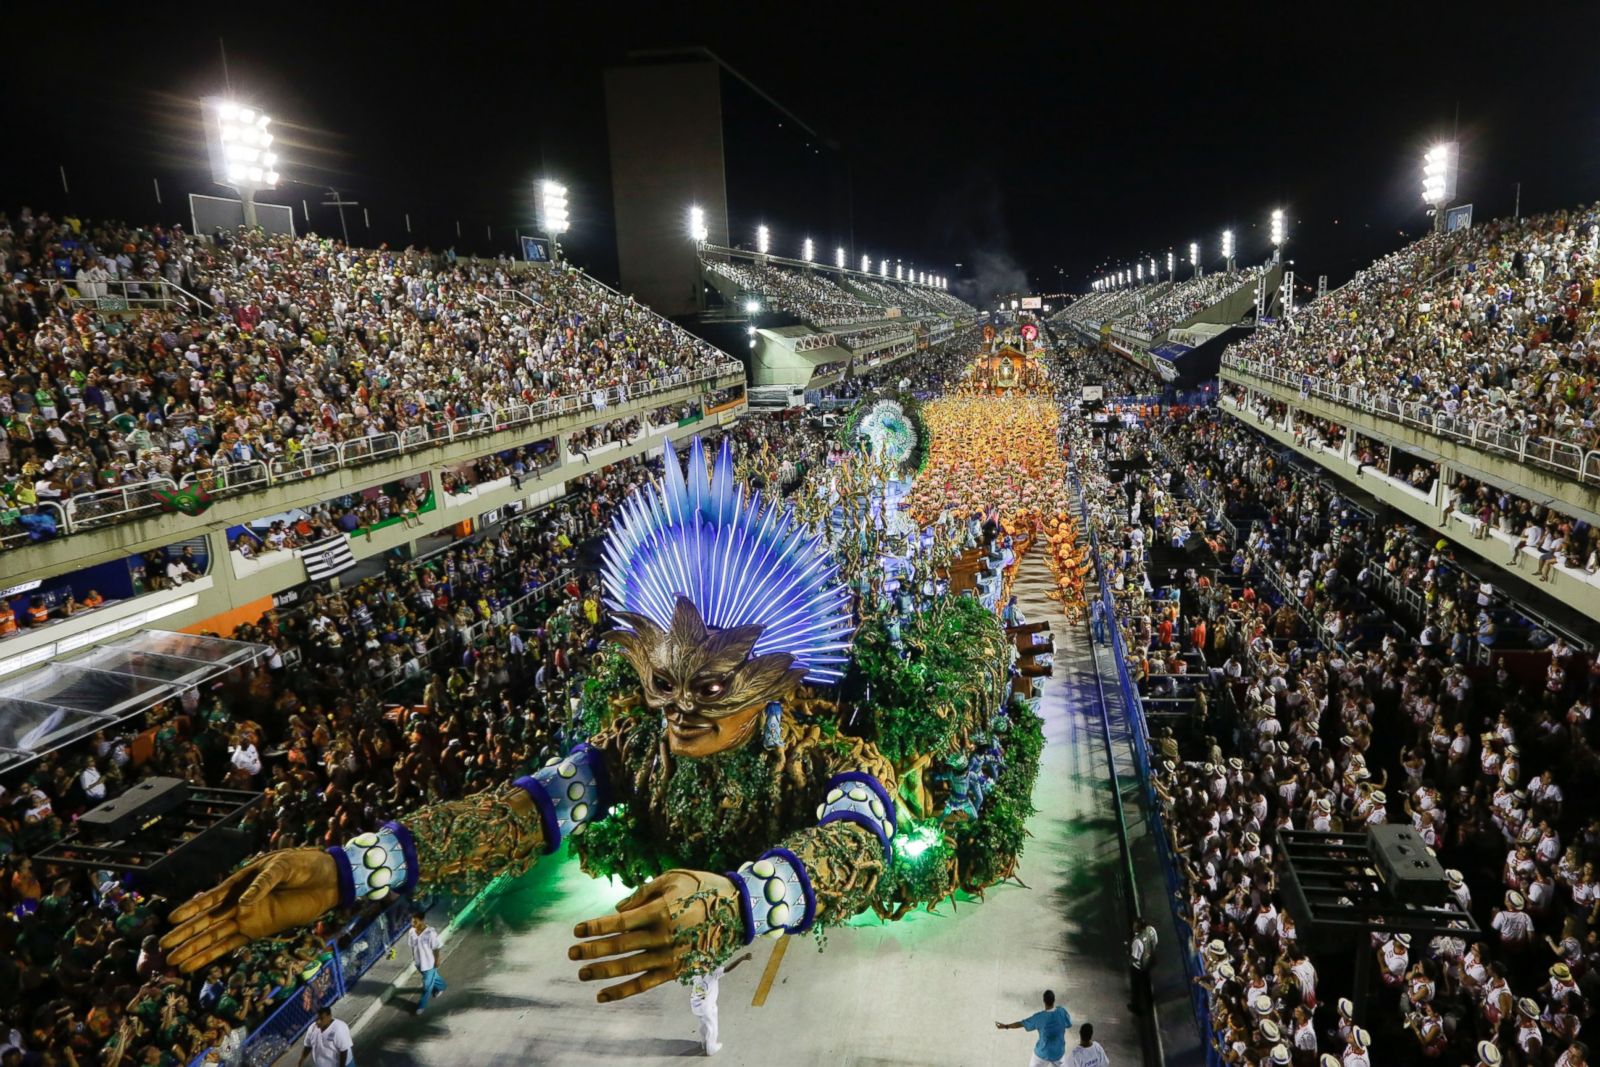 Sneak peek of the extravagant Rio de Janeiro carnival 